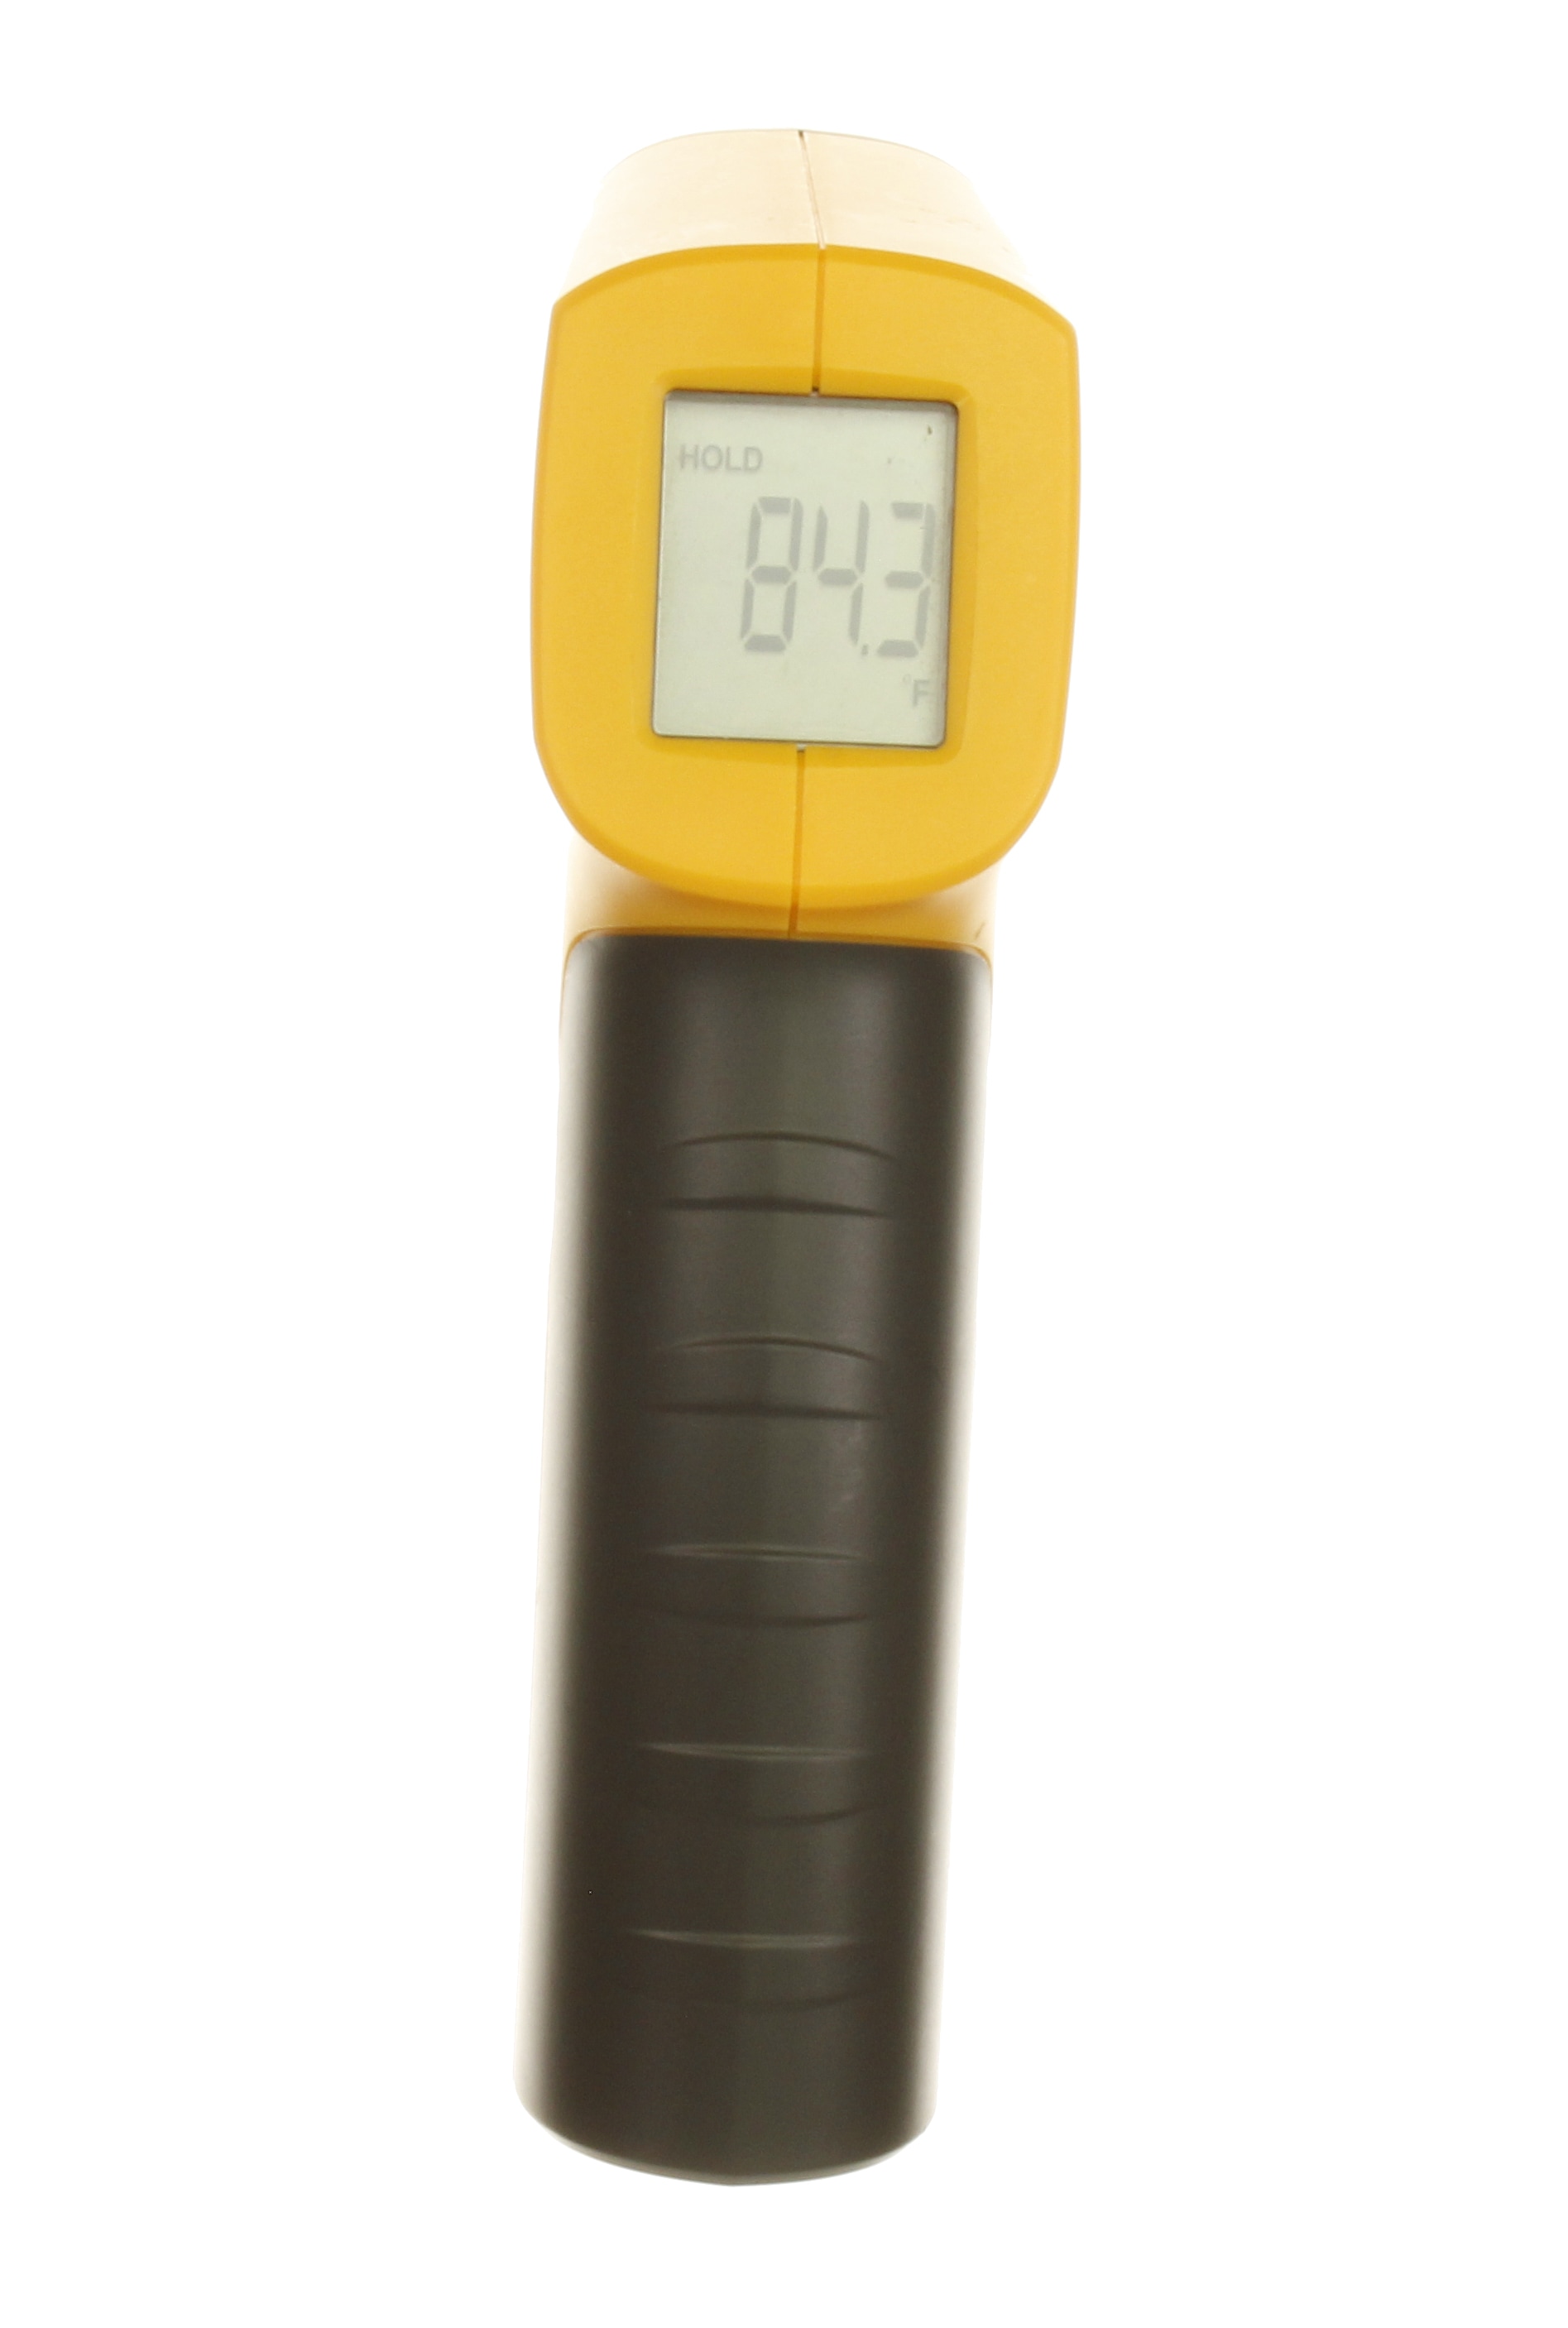 IDEAL LED Dual Targeting Laser Infrared Thermometer in the Infrared  Thermometer department at